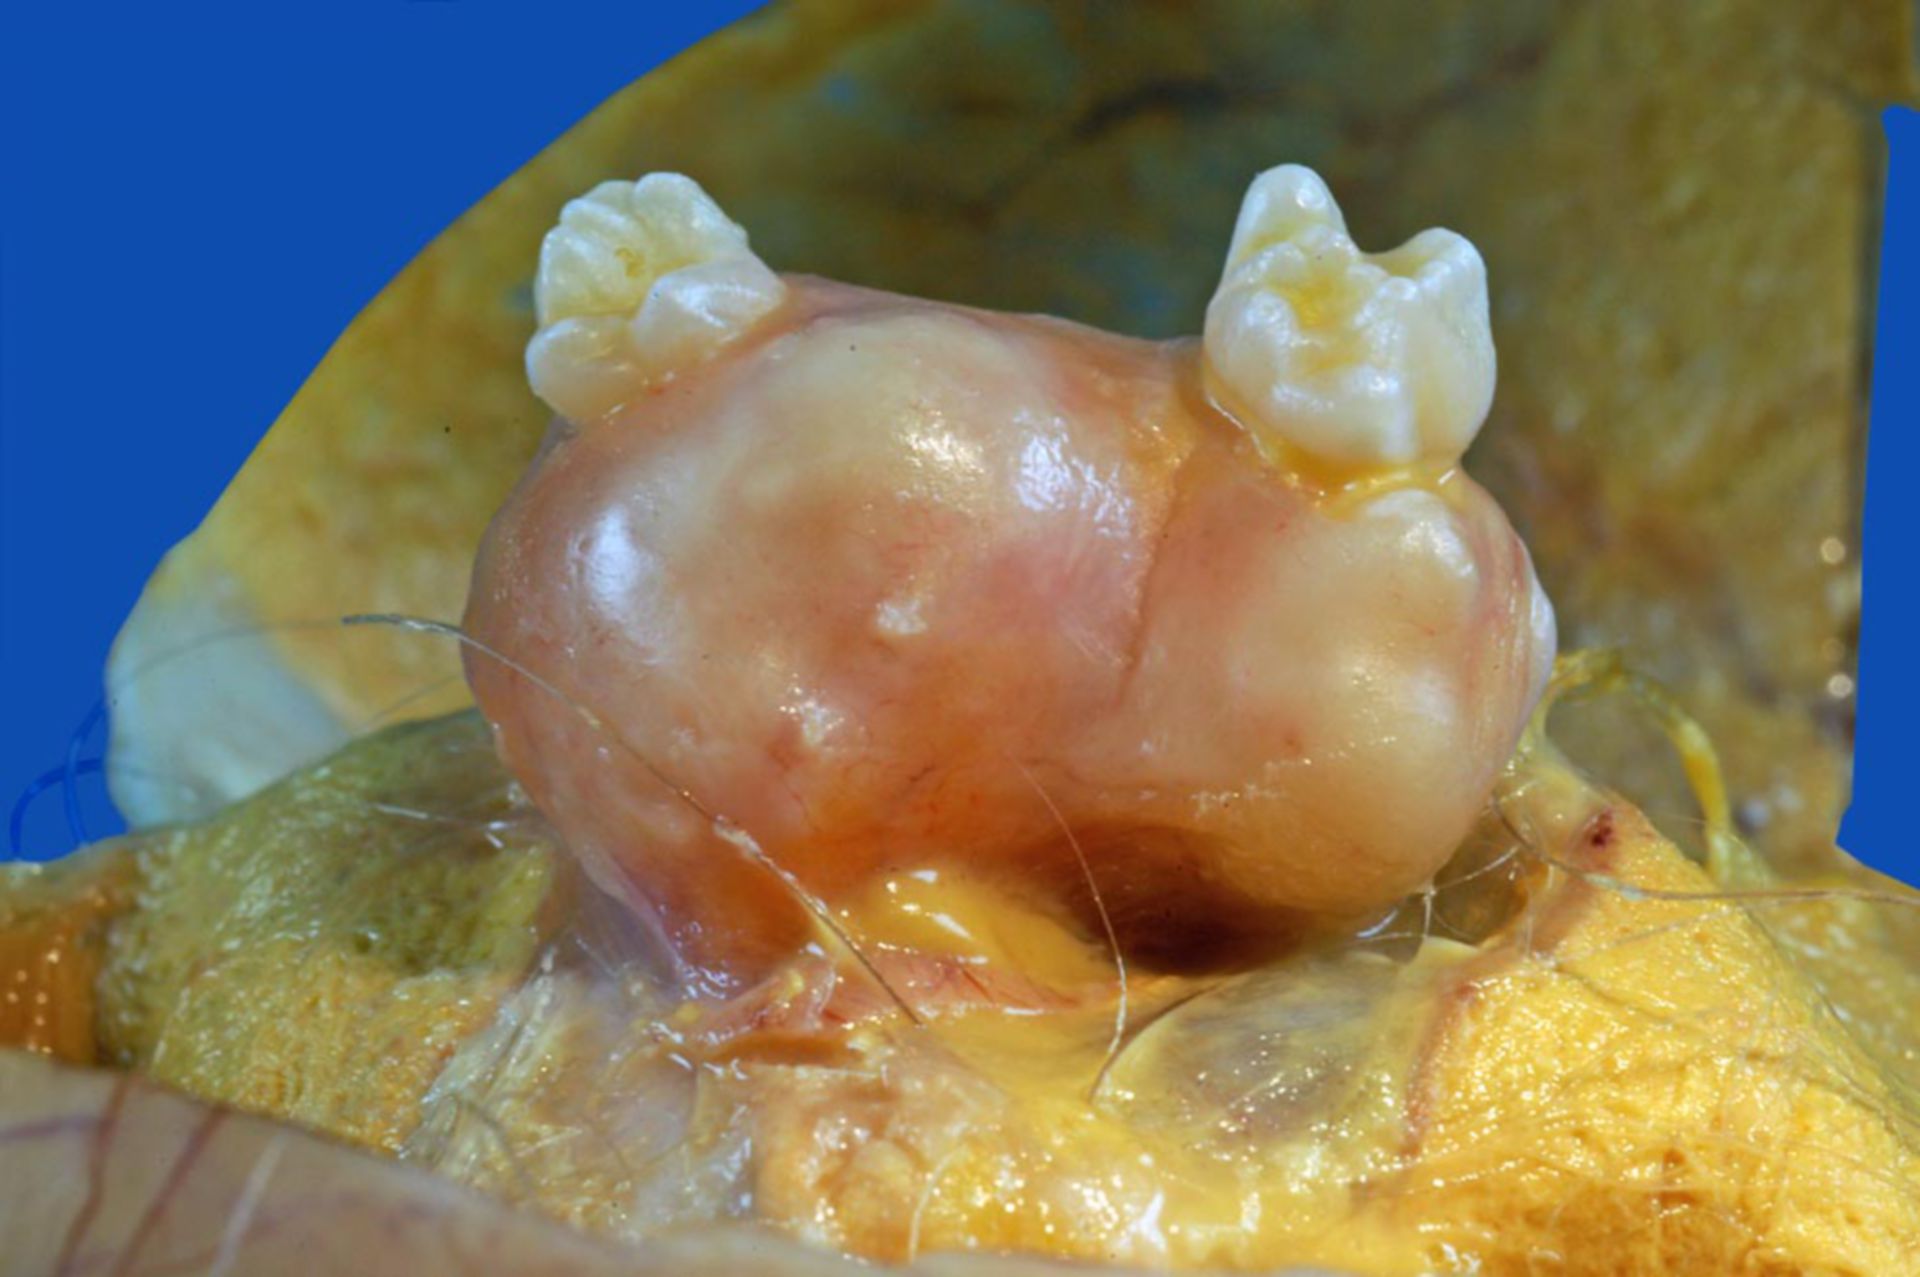 Benign mature teratoma of the ovary (2)